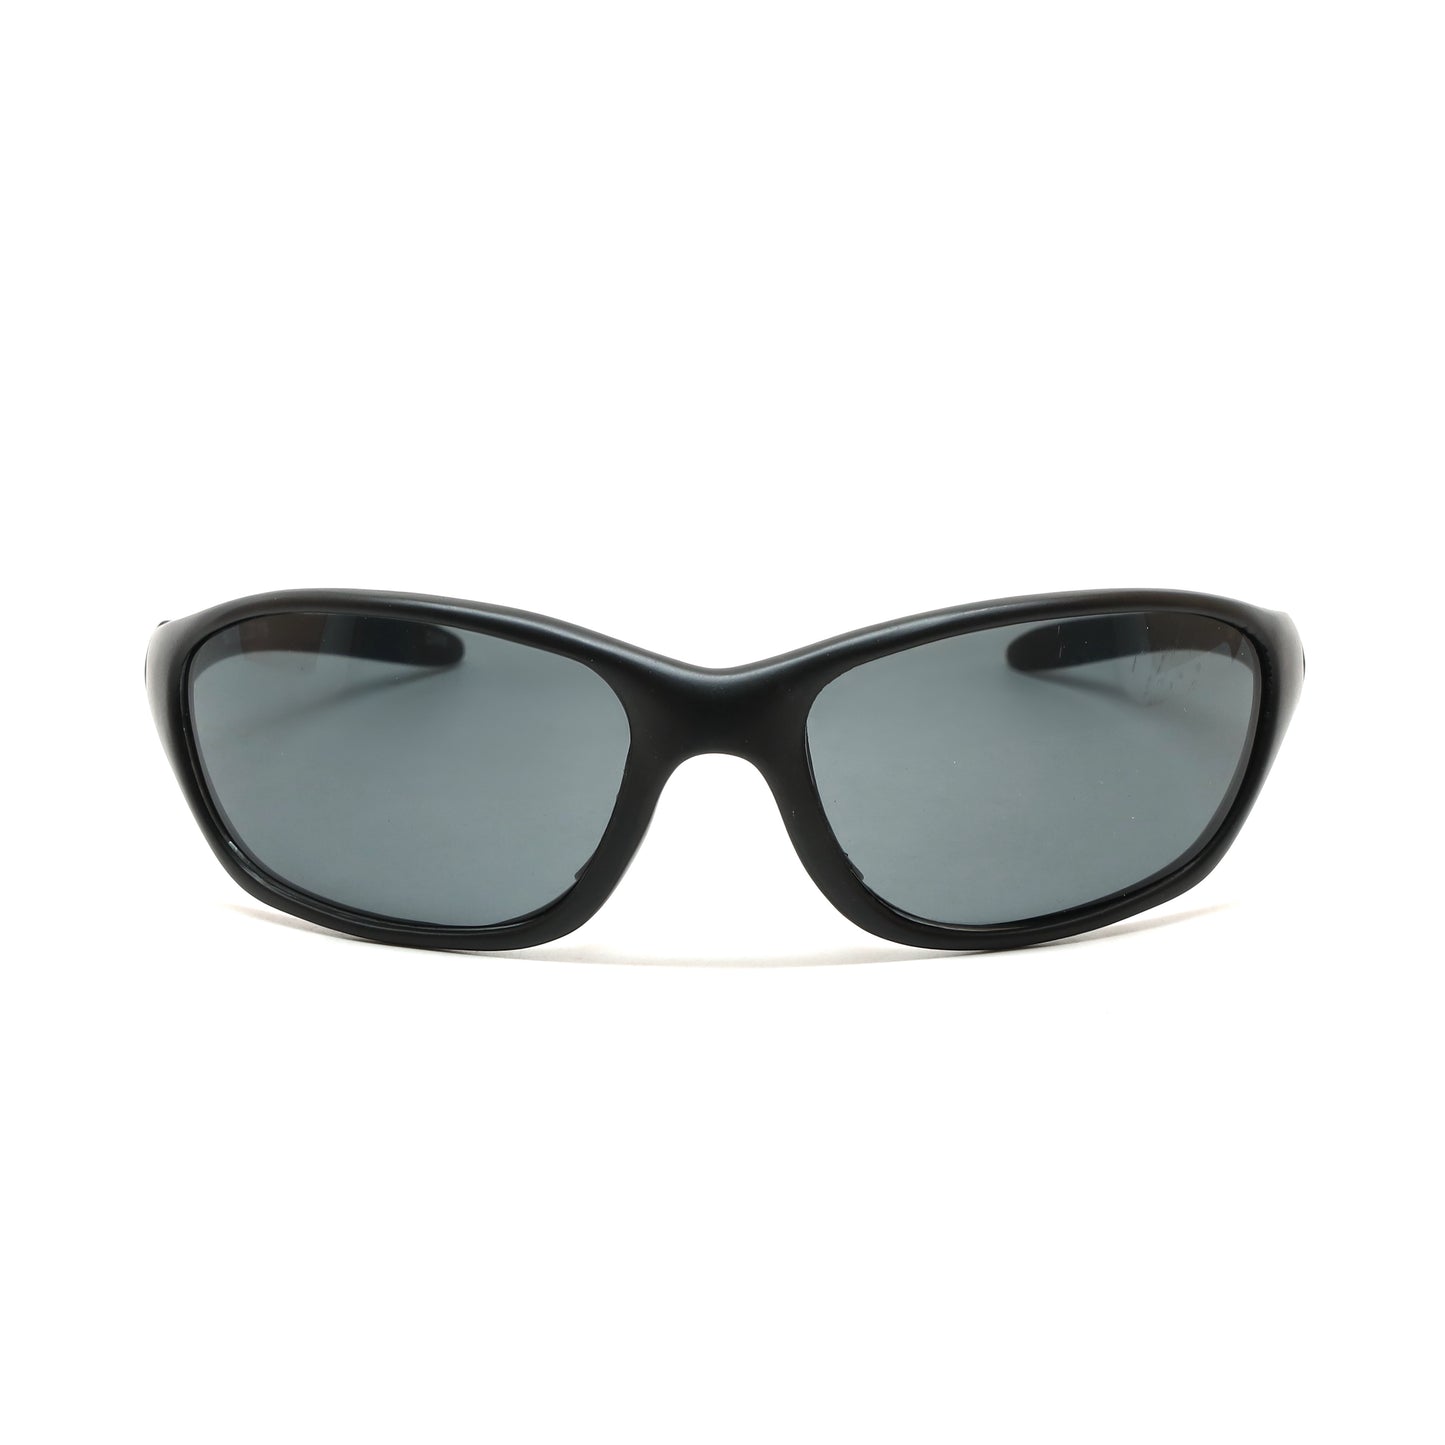 Prototype 6 Flame Deadstock Wraparound Visor Sunglasses - Grey